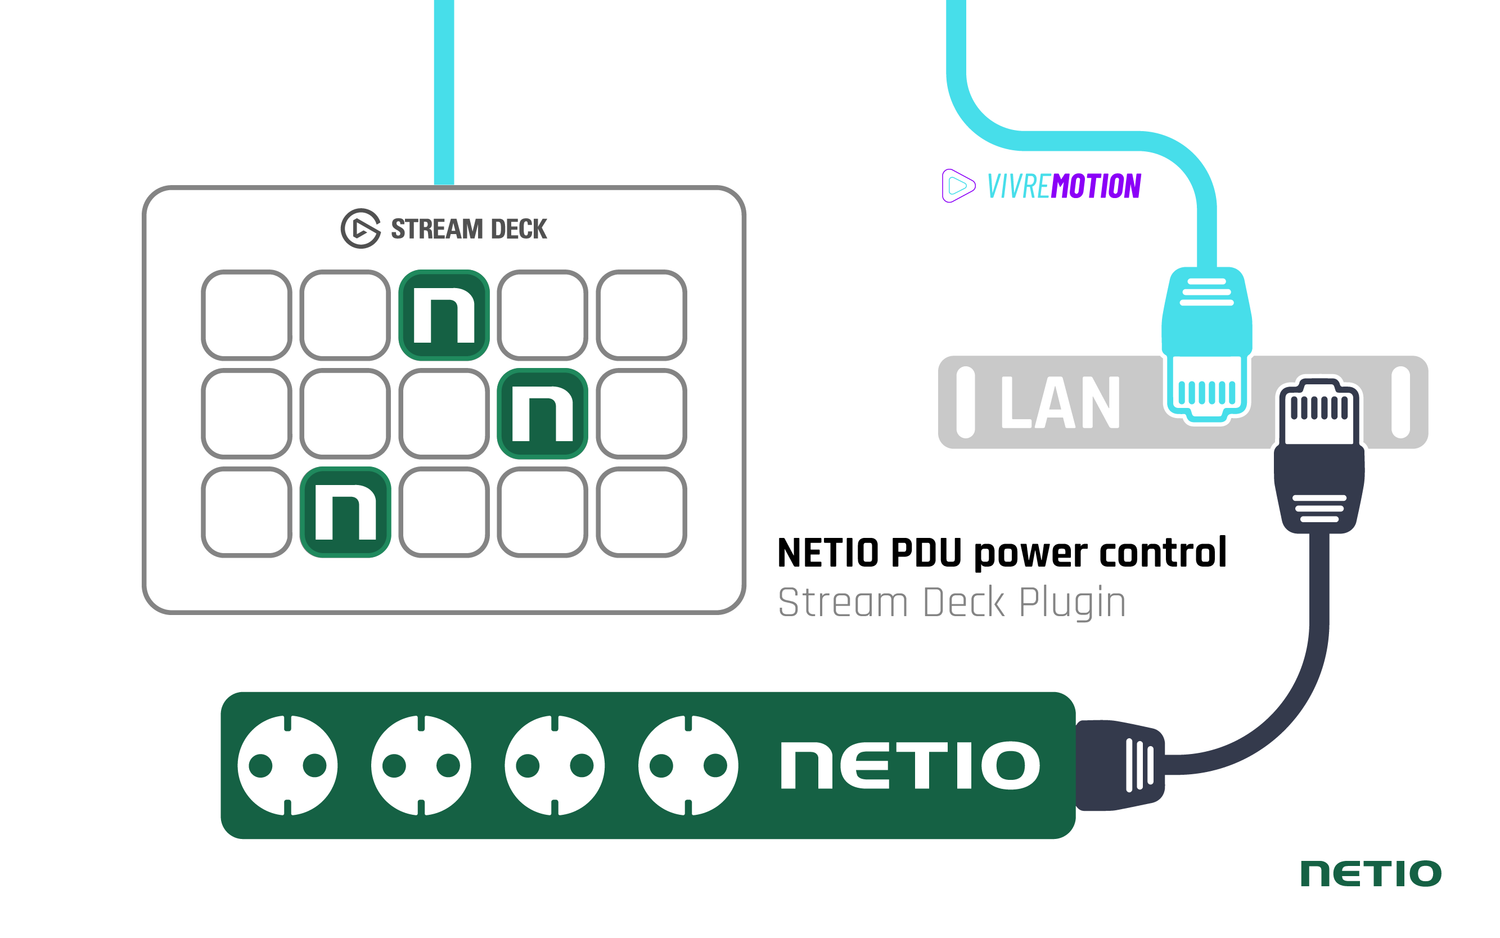 NETIO PDU POWER CONTROL STREAM DECK PLUGIN CHART | VIVRE-MOTION